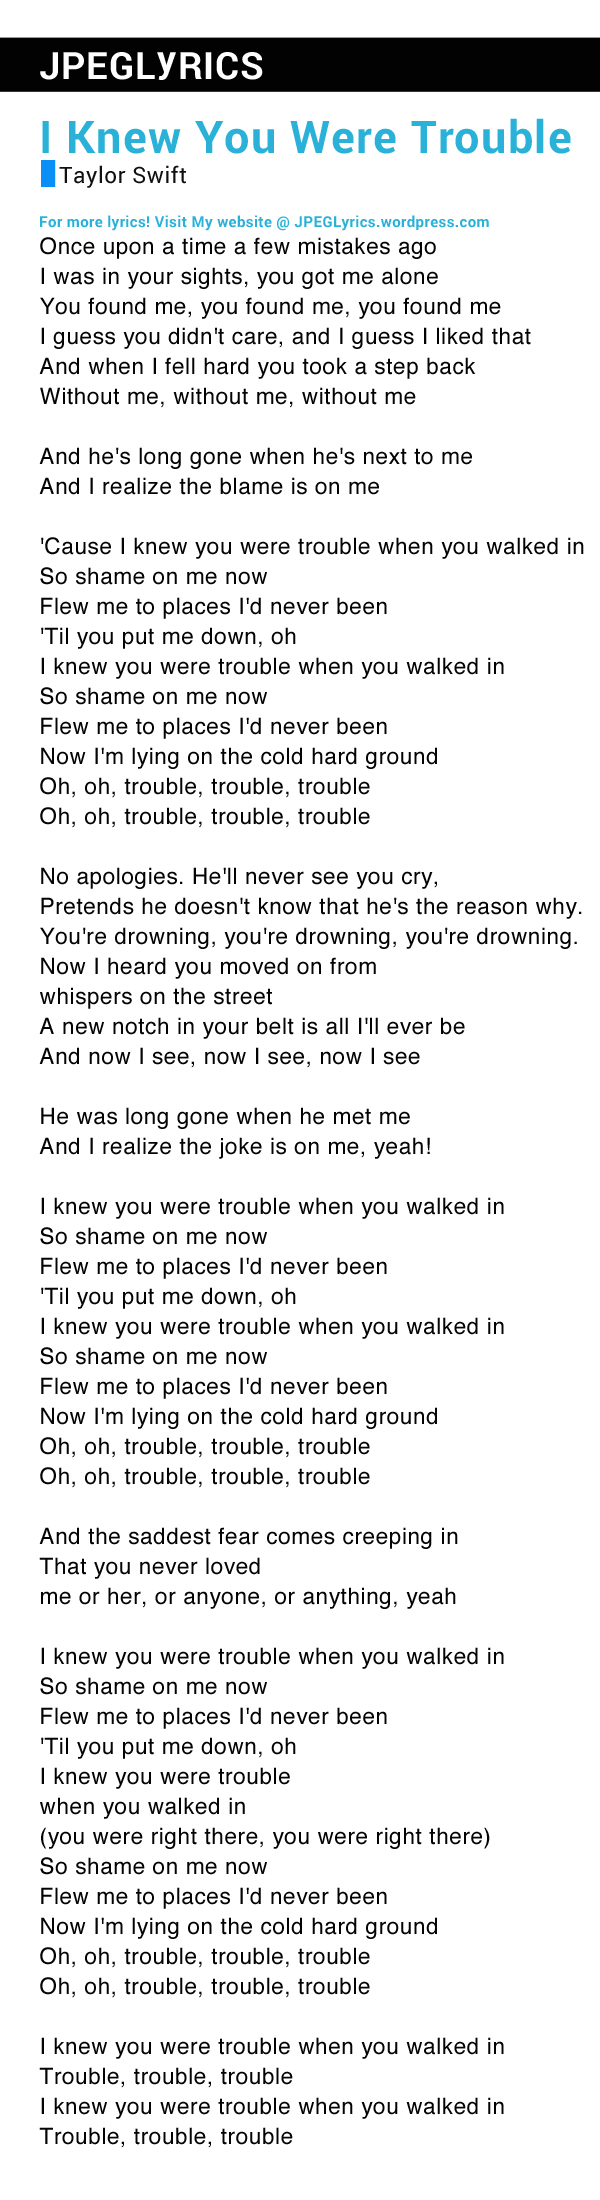 I Knew You Were Trouble By Taylor Swift Lyrics